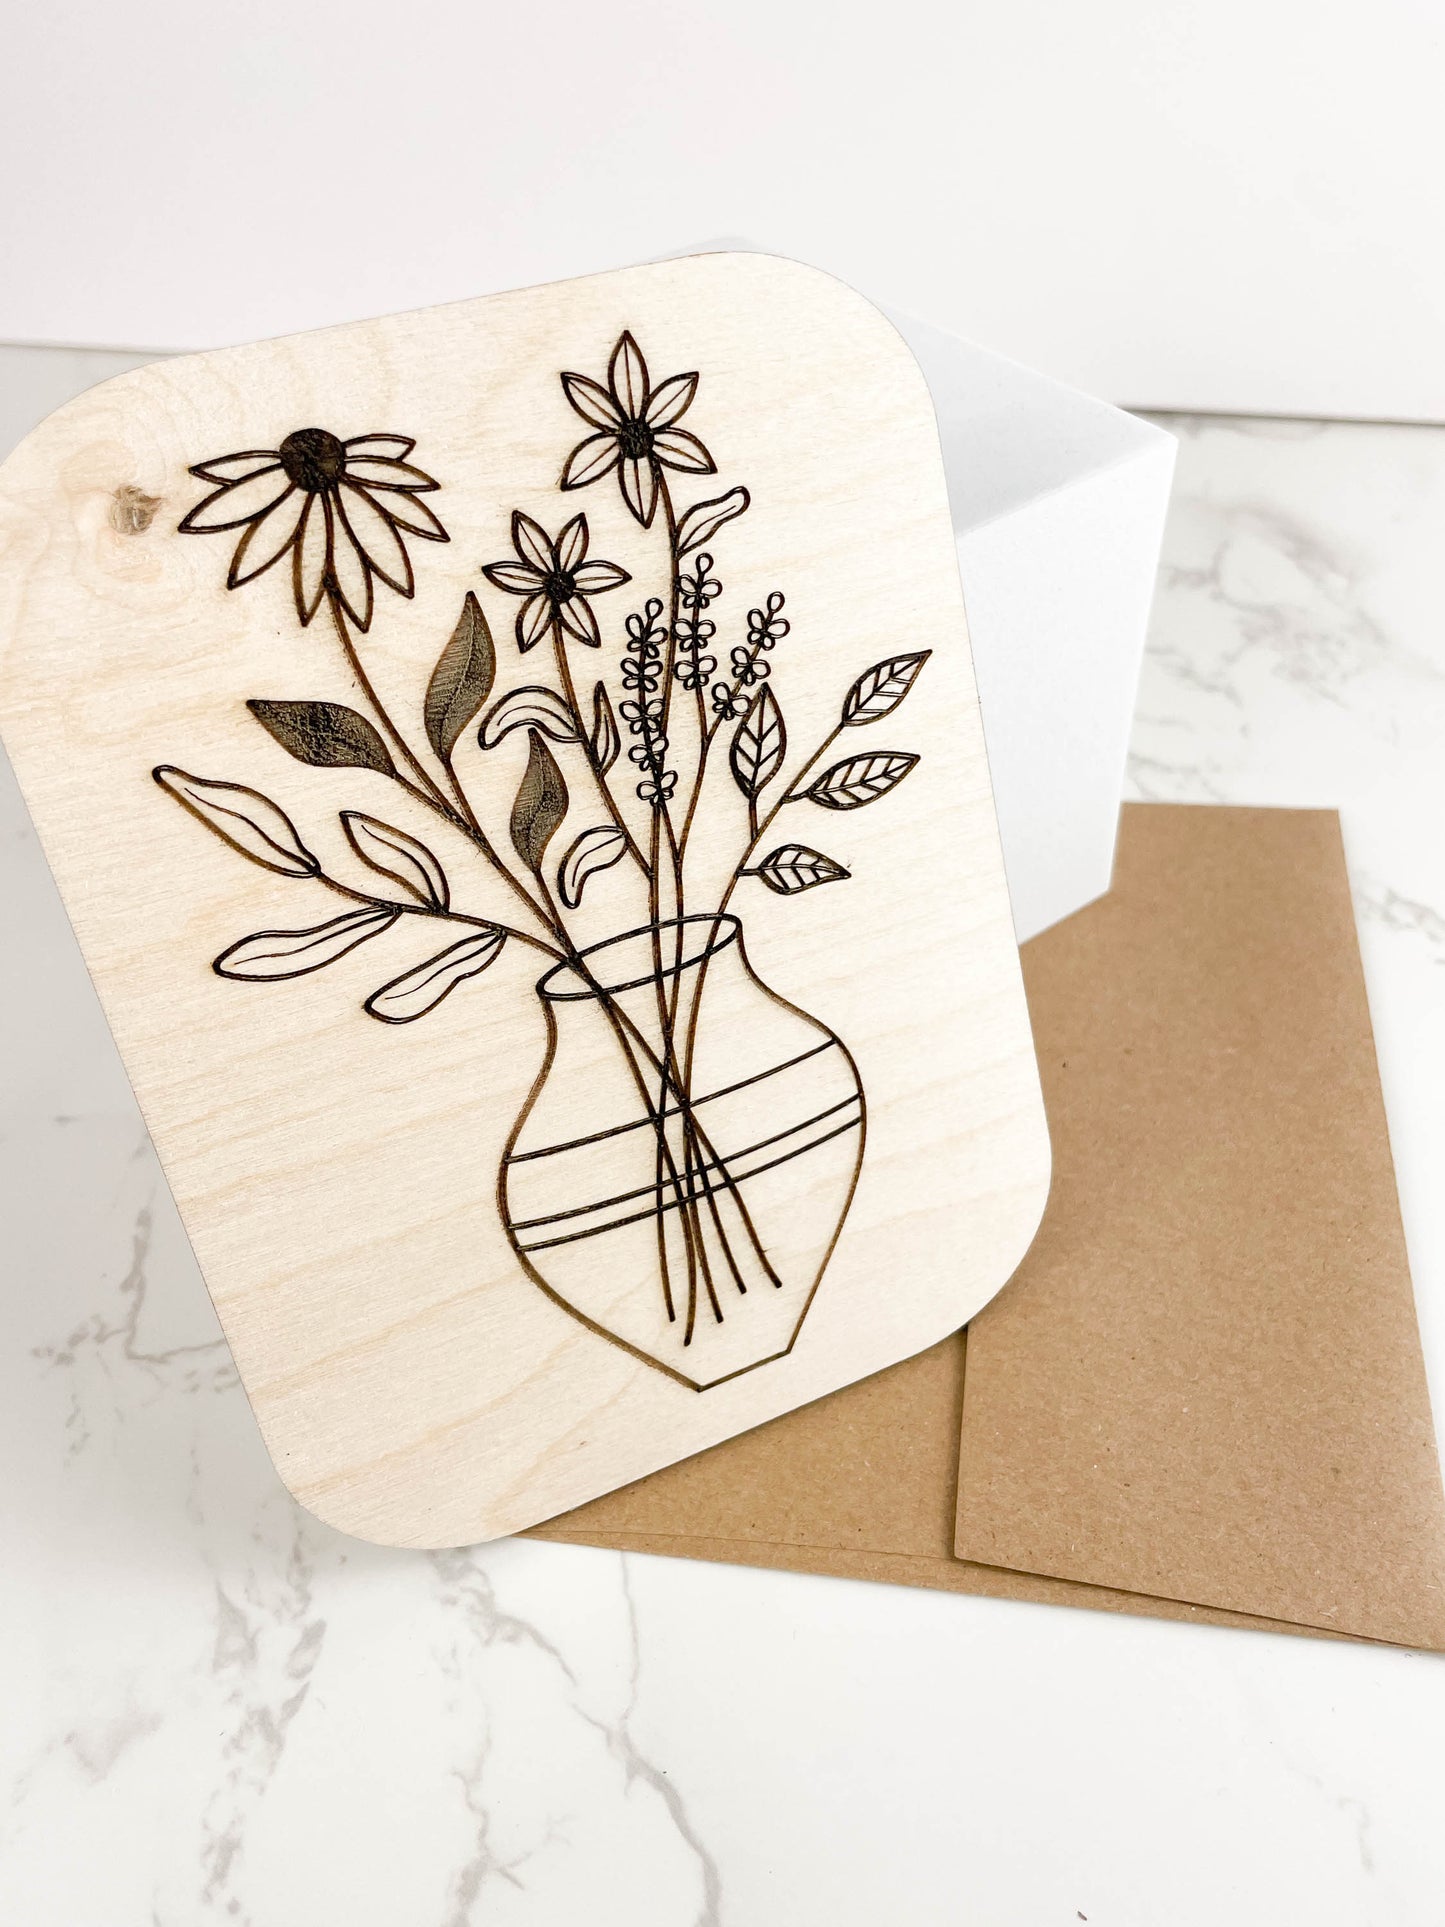 Wooden Greeting Card: Flowers in Vase